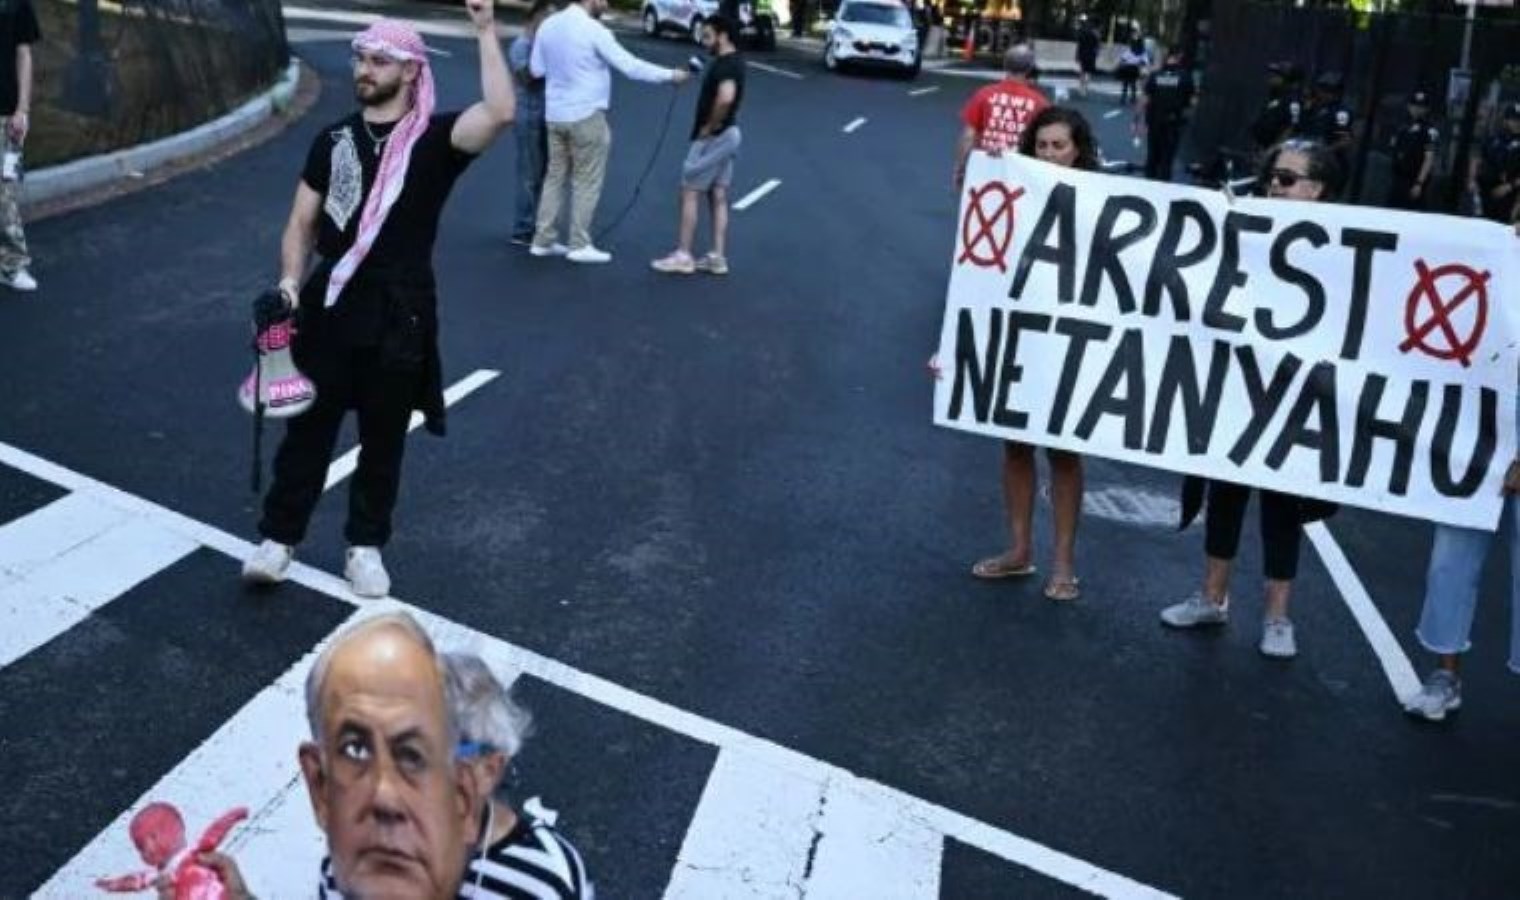 Washington’da Netanyahu’ya büyük tepki: “Savaş suçlusunu tutuklayın”